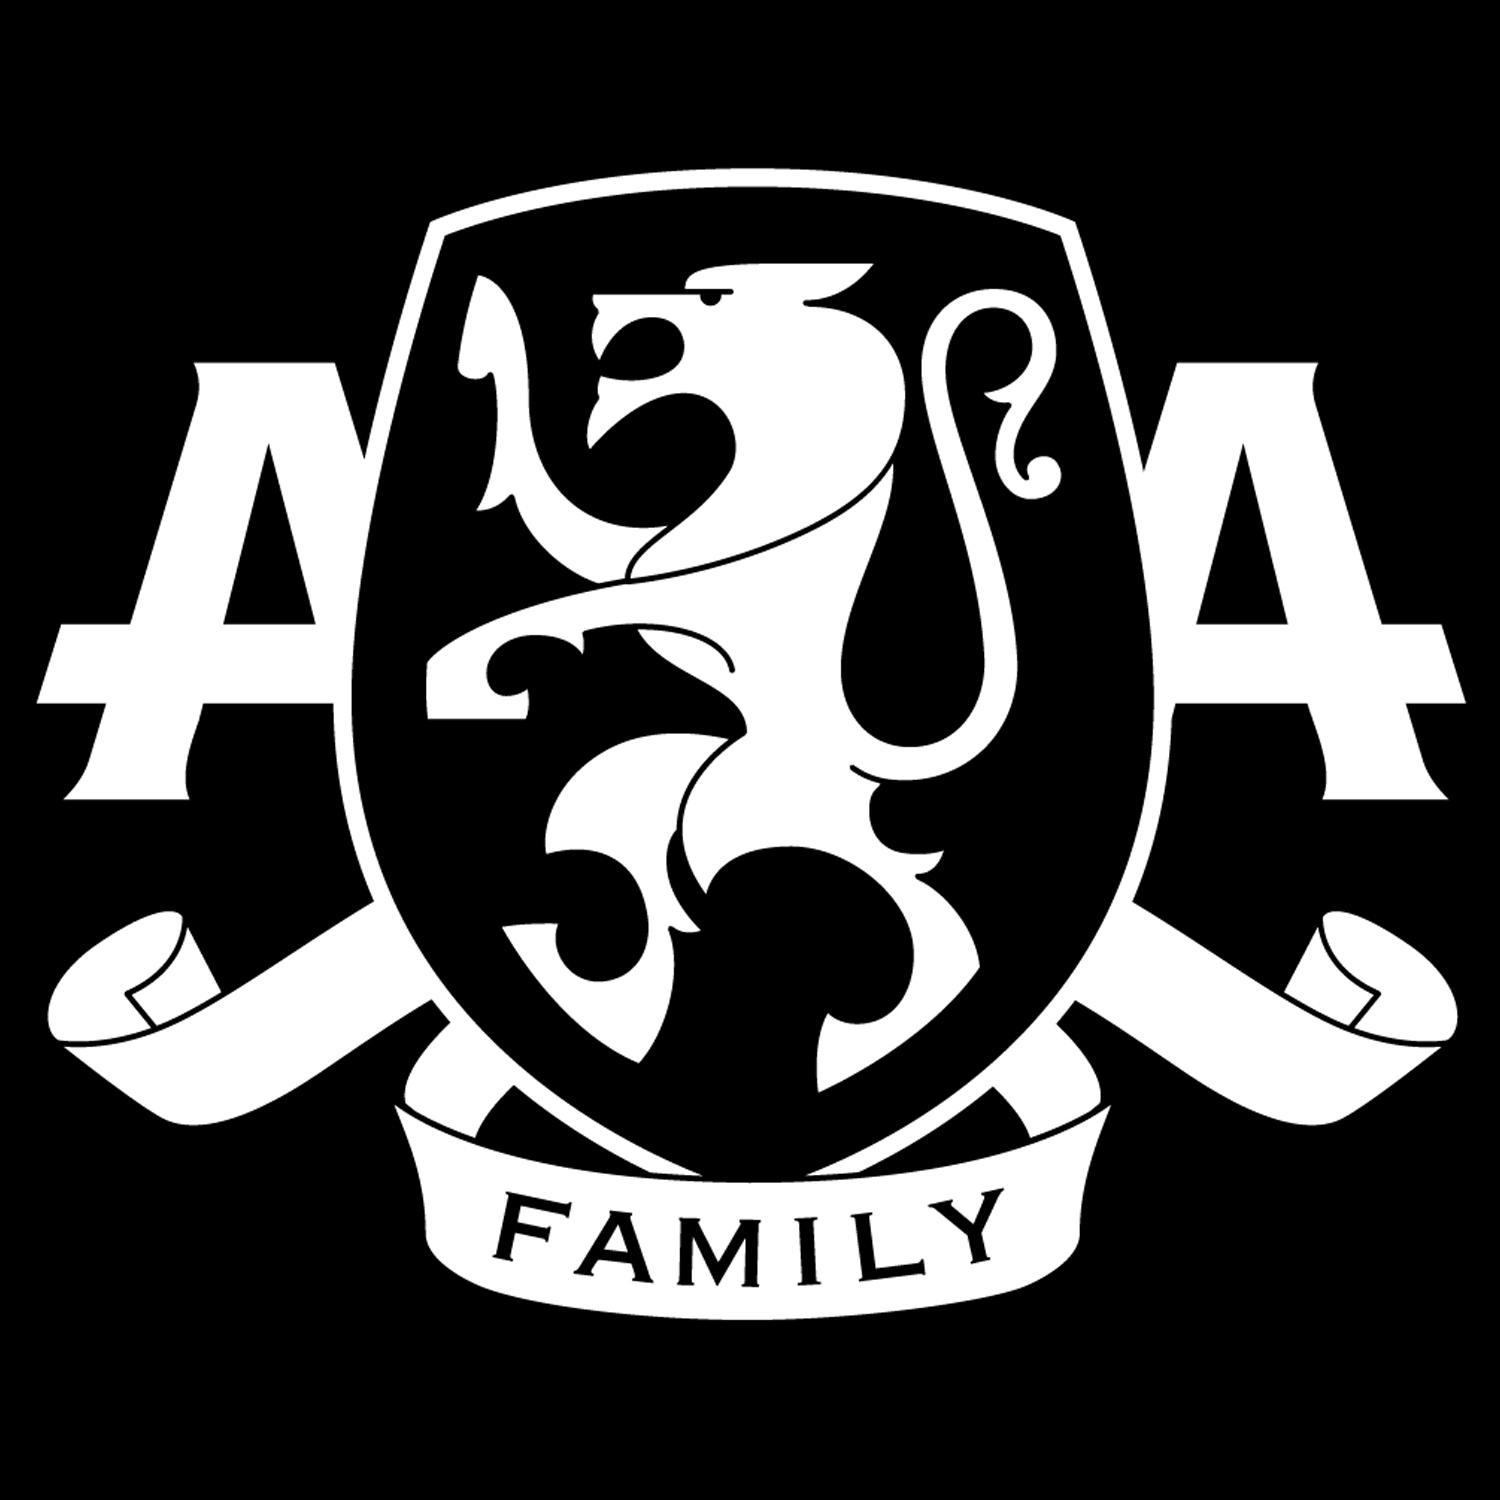 The AA family